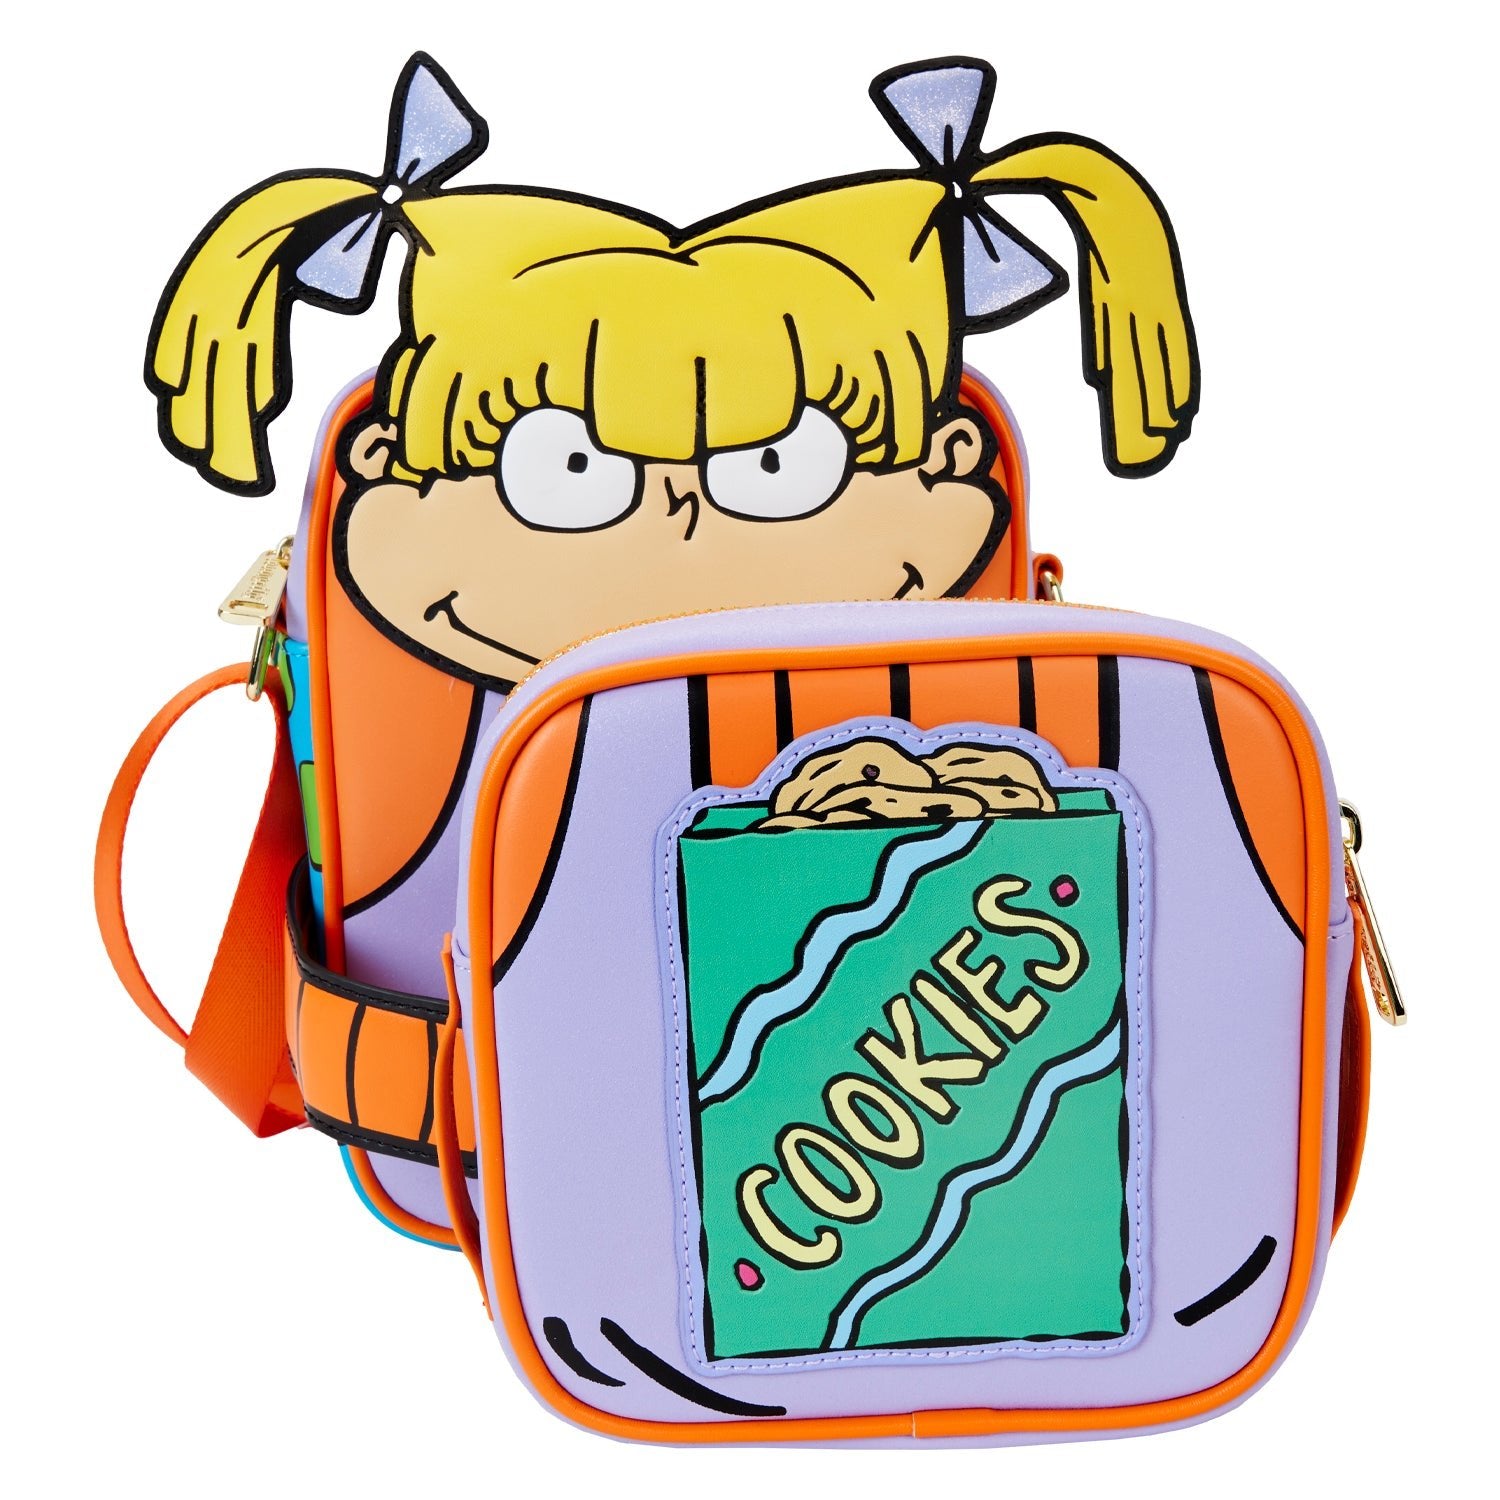 Loungefly x Nickelodeon Angelica Crossbuddies Bag - GeekCore